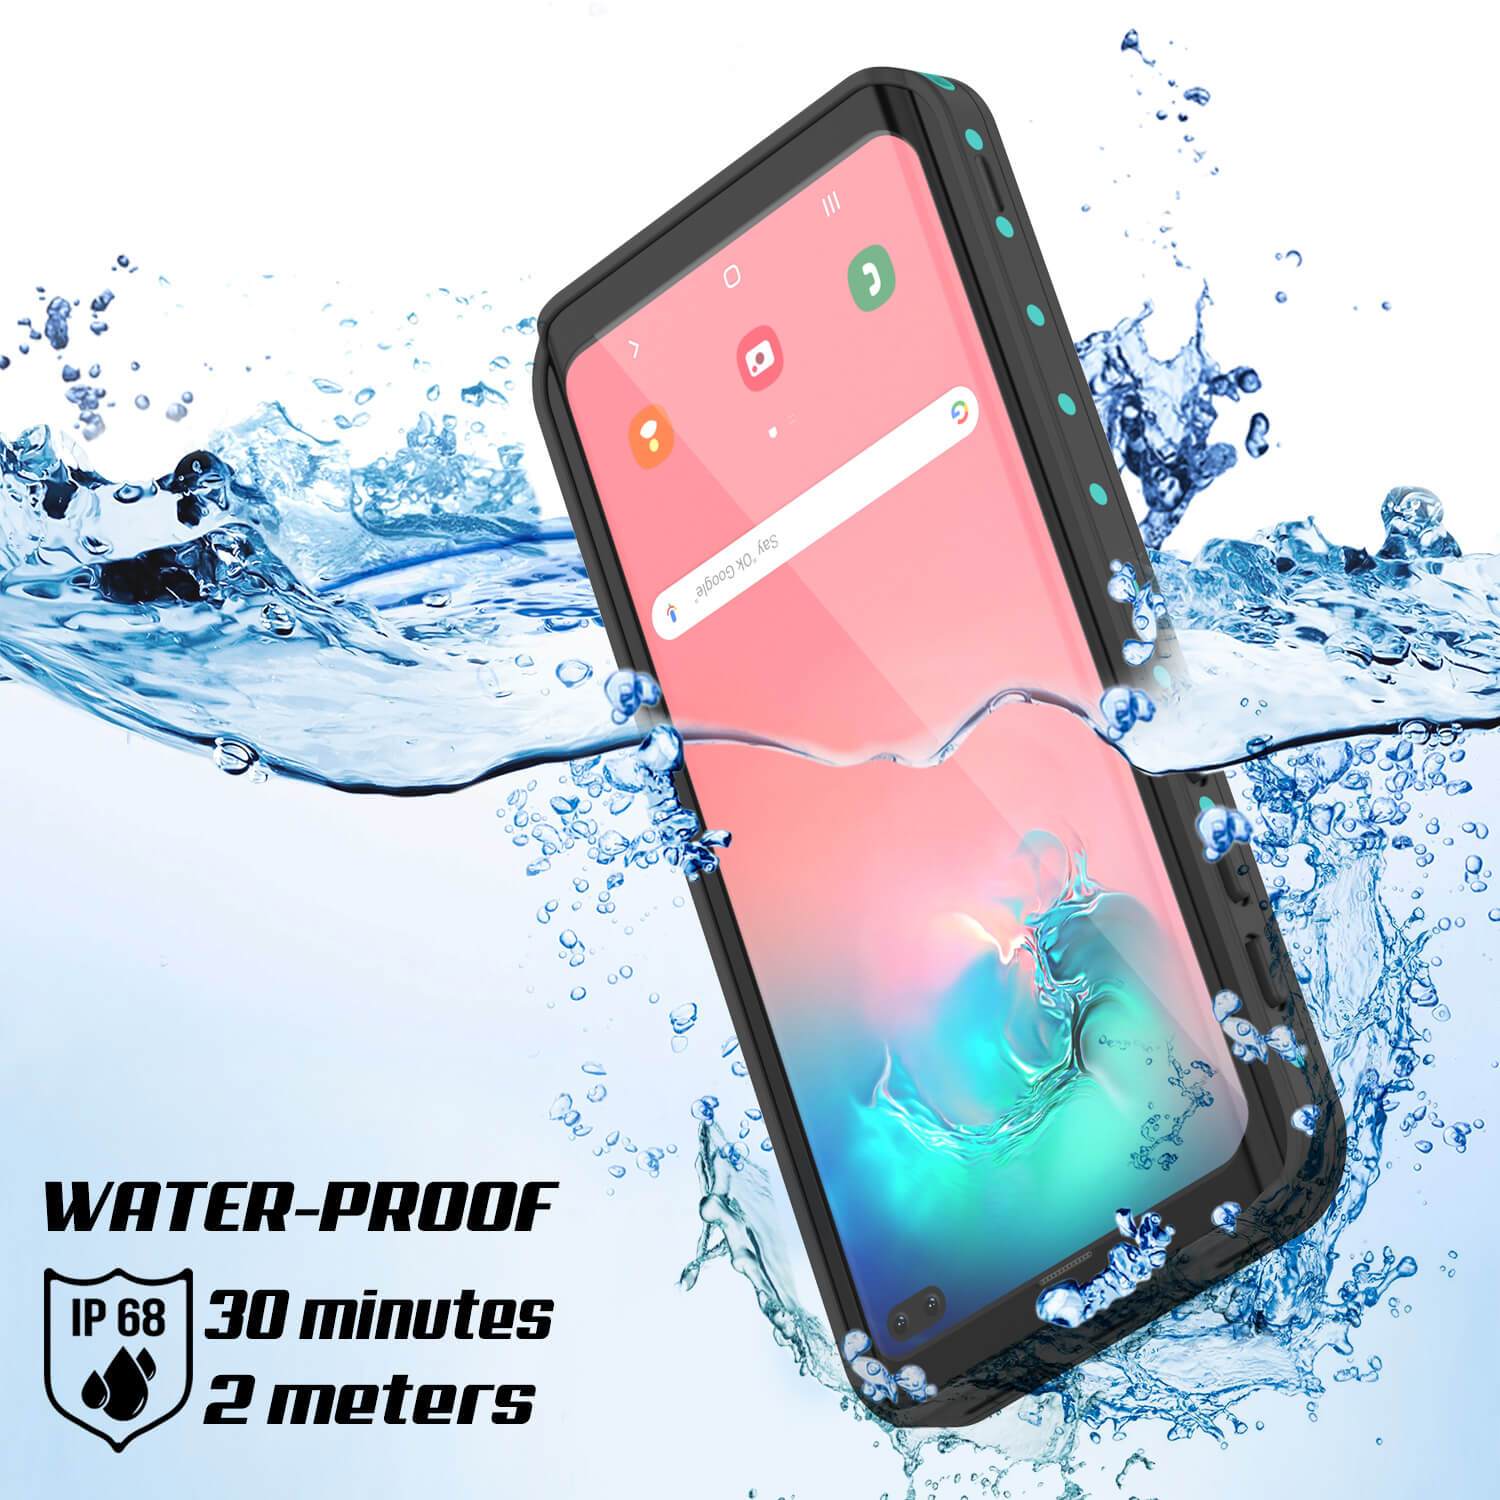 Galaxy S10e Waterproof Case PunkCase StudStar Teal Thin 6.6ft Underwater IP68 Shock/Snow Proof